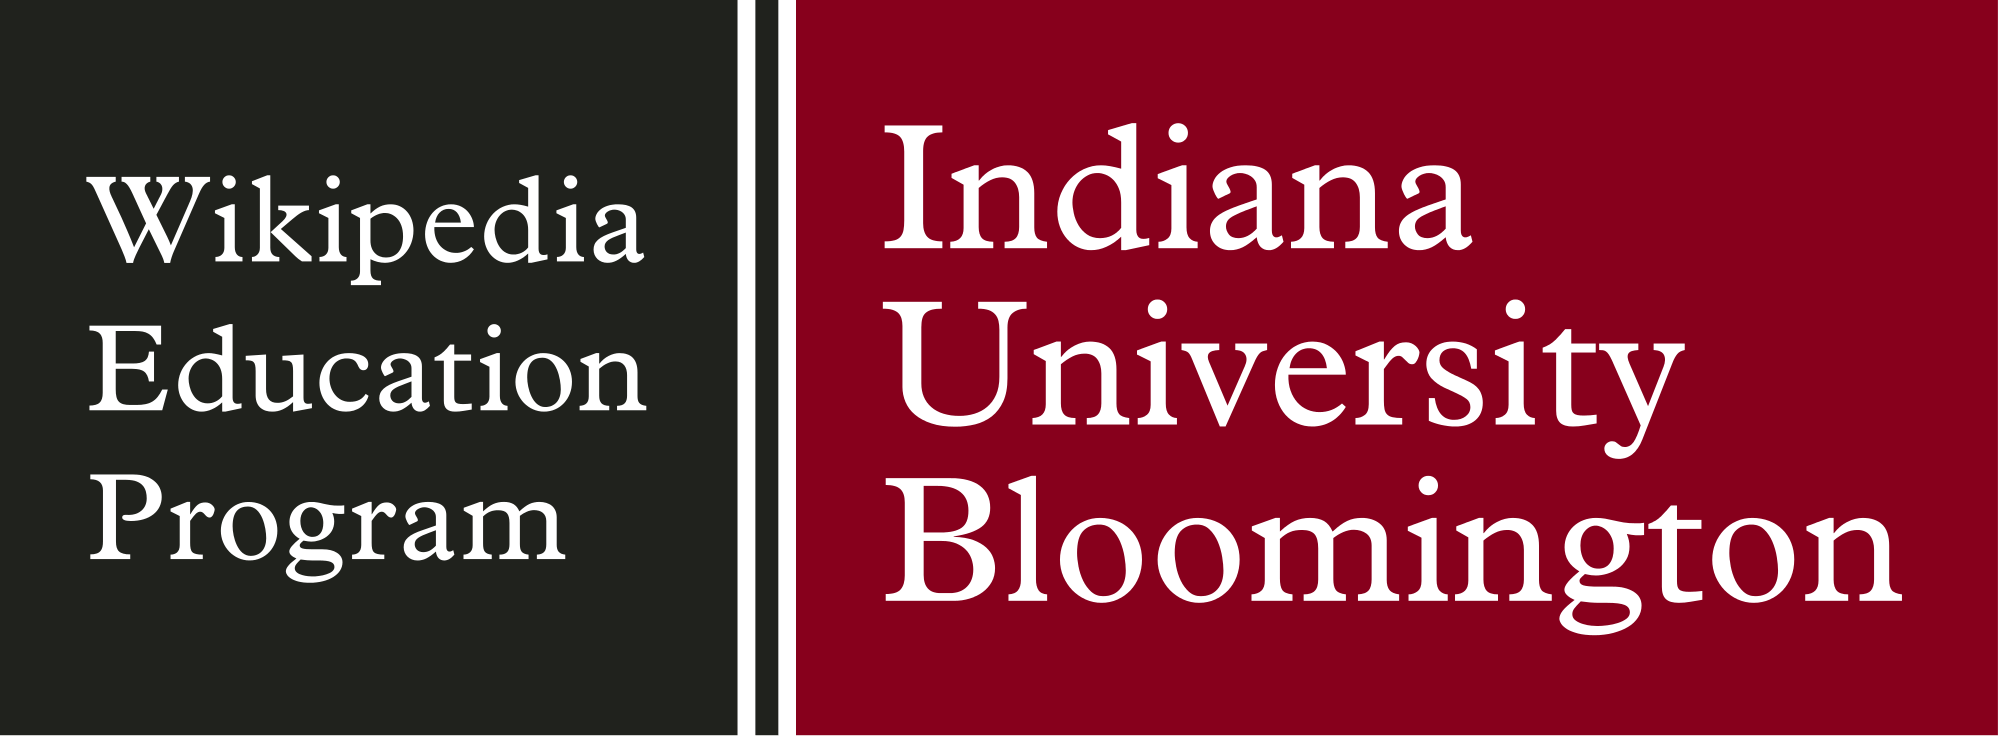 Indiana University Bloomington Logo - Wikipedia Education Program Indiana University Bloomington logo